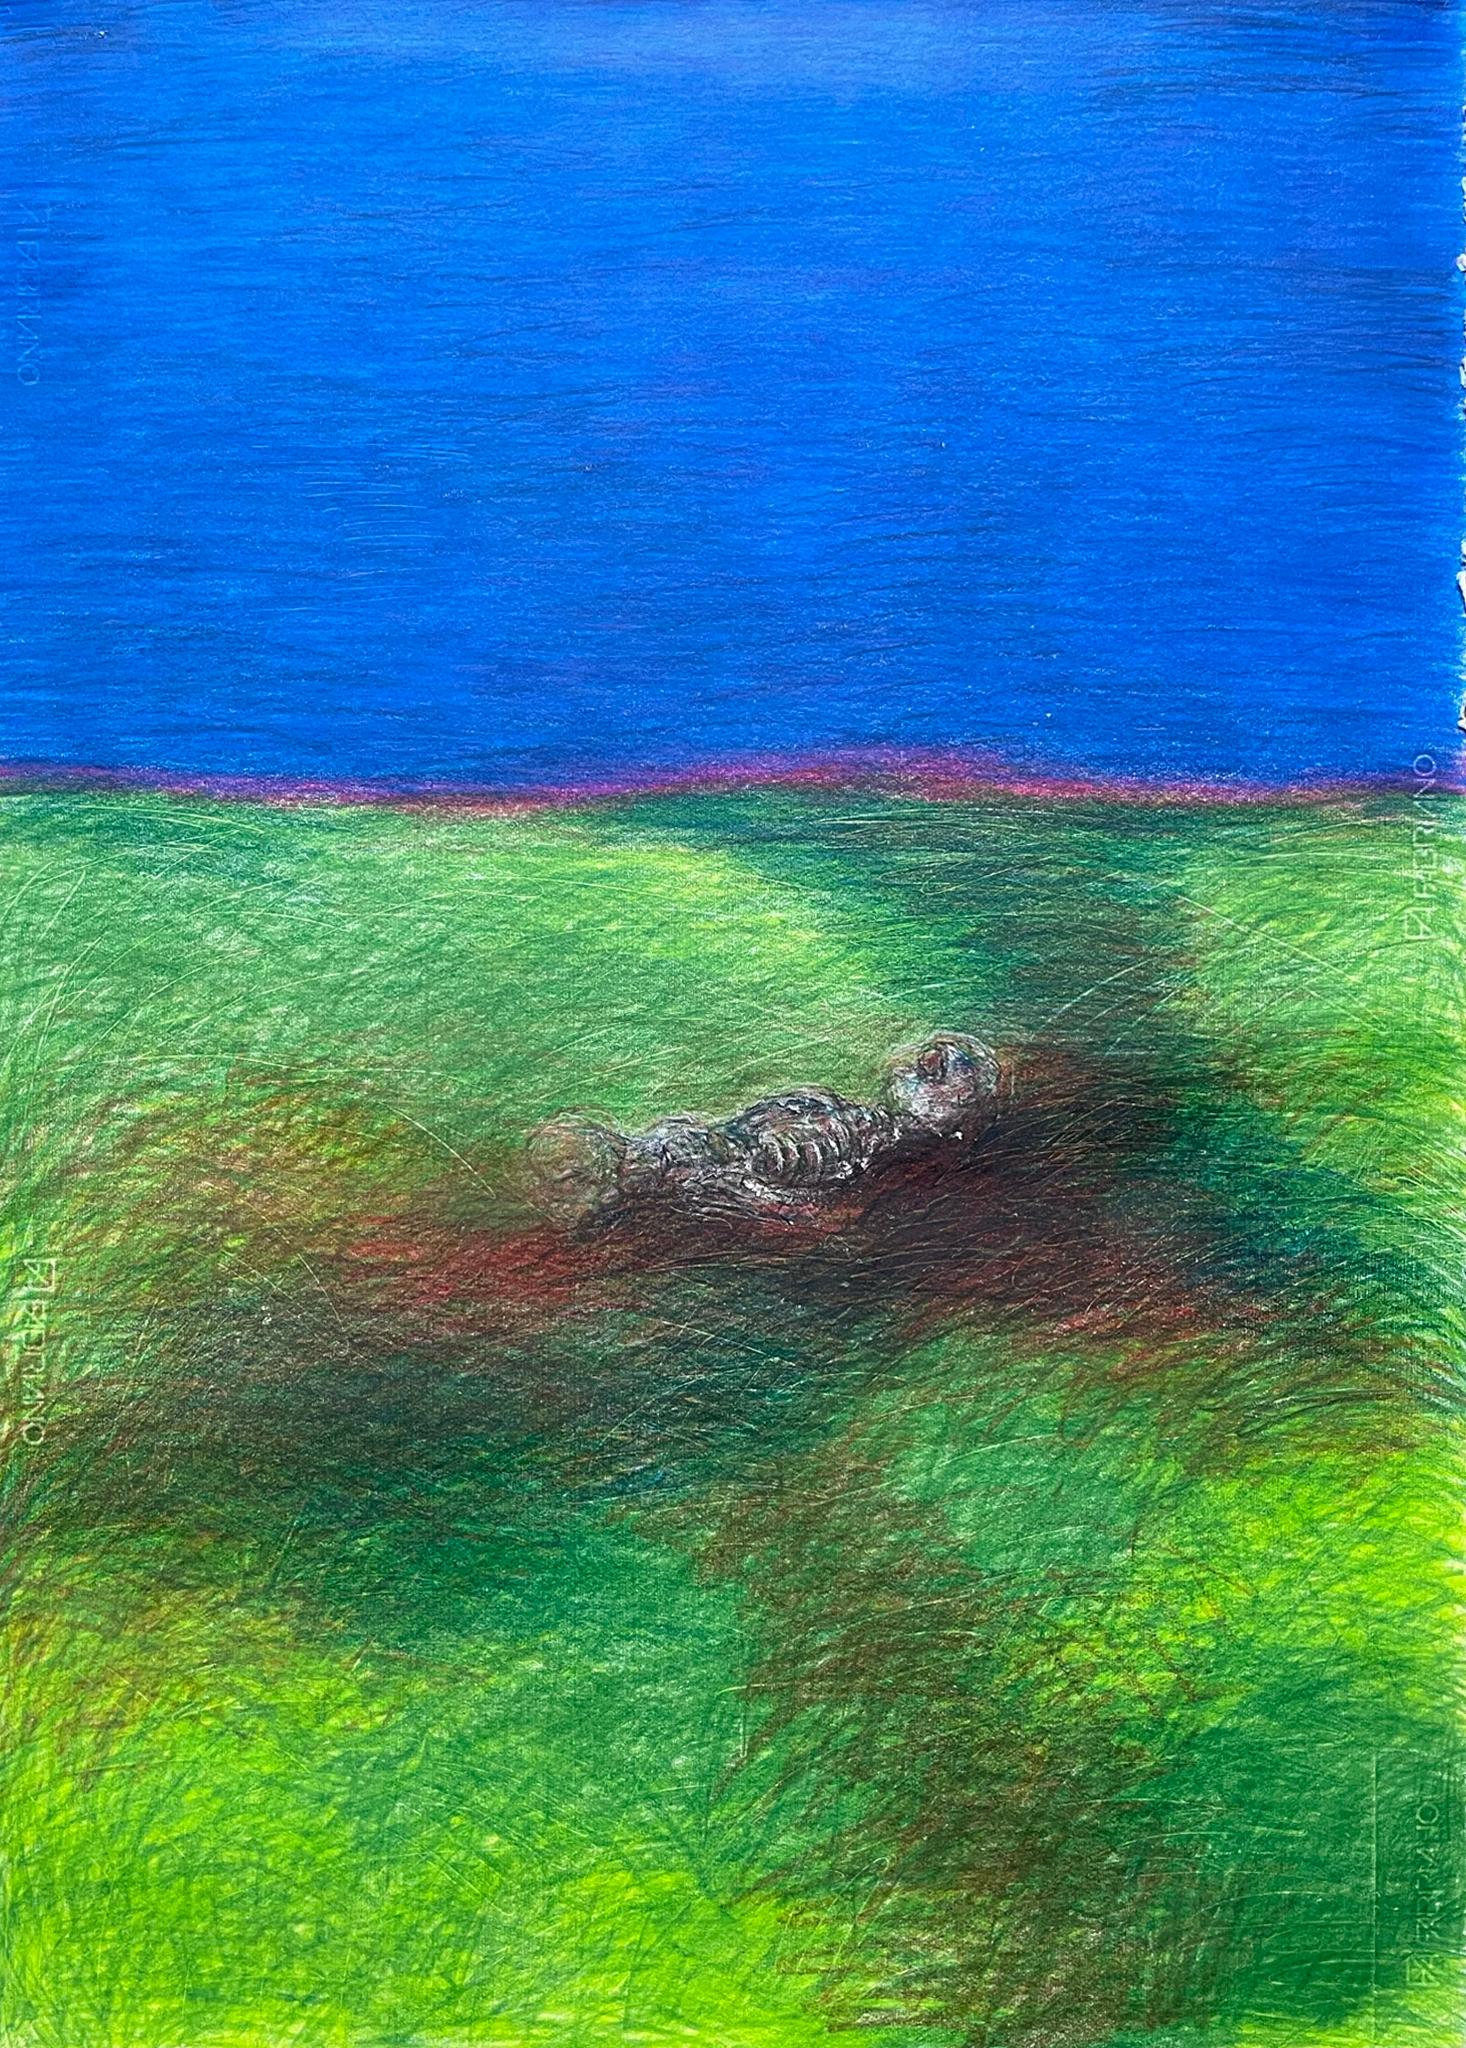 Zsolt Berszán Landscape Art - Untitled_Body on the Field #1 - 21st Century, Green, Blue, Sky, Contemporary